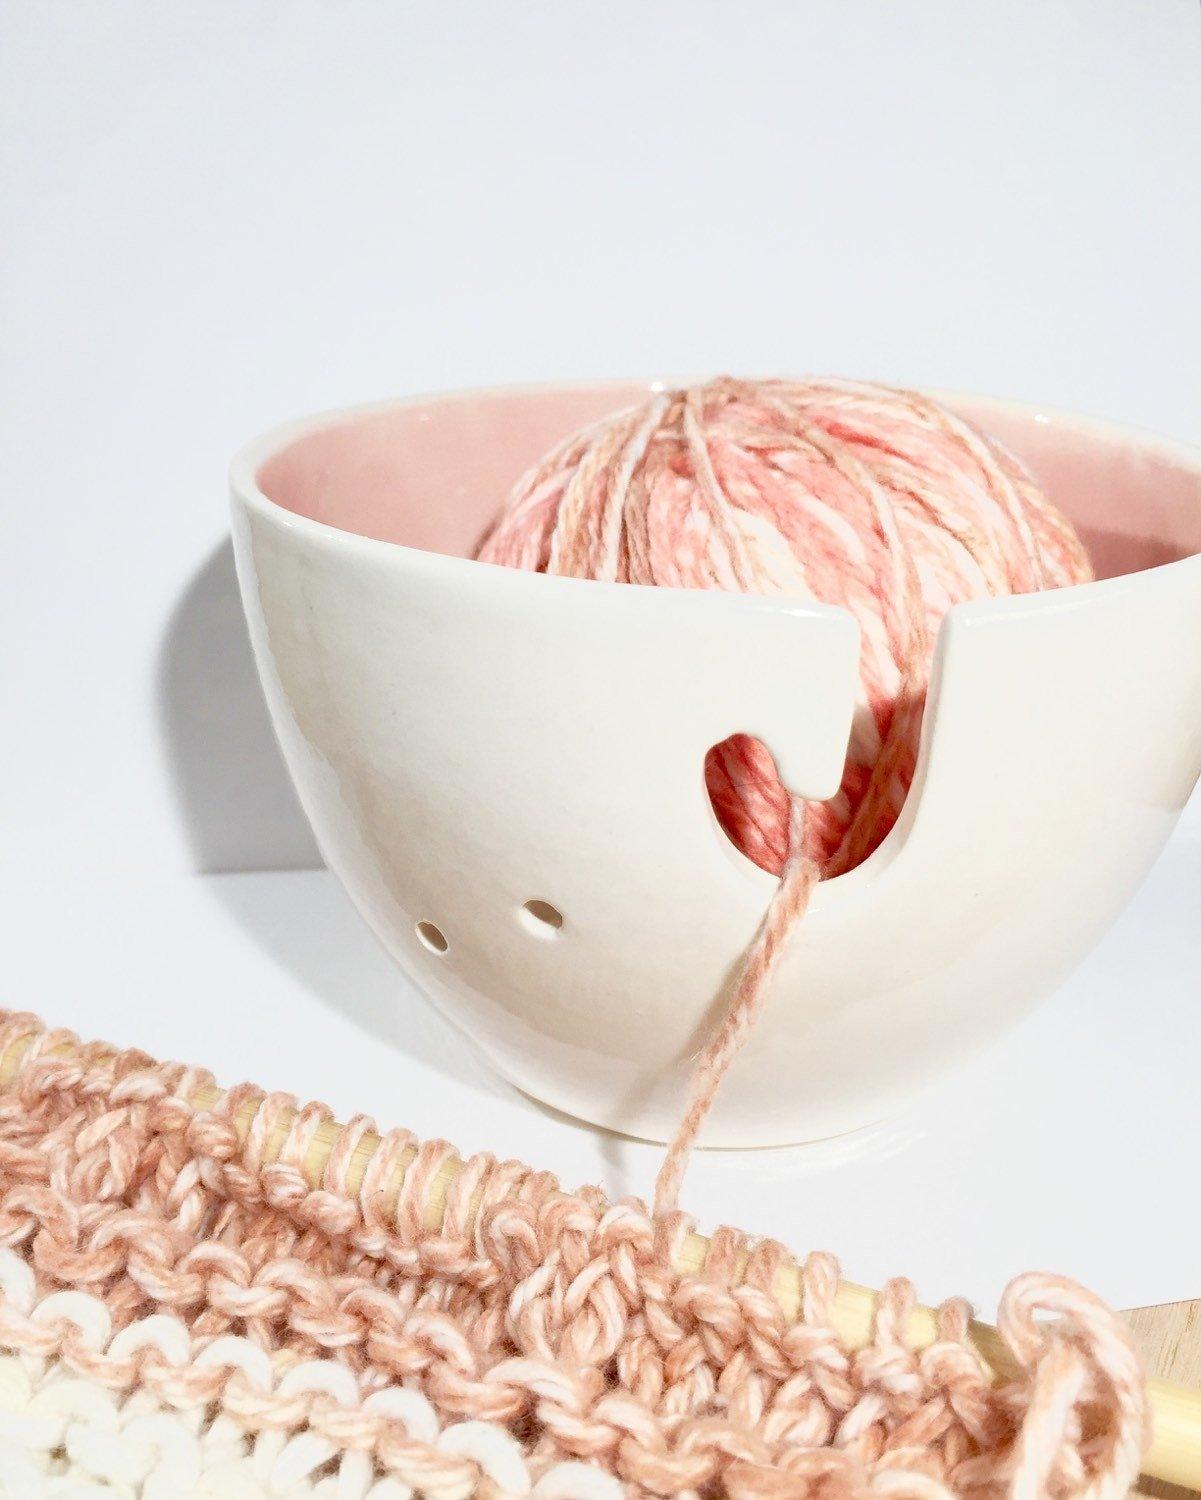 Petite White Mint Green Yarn bowl, Knitting Bowl Small Ceramic